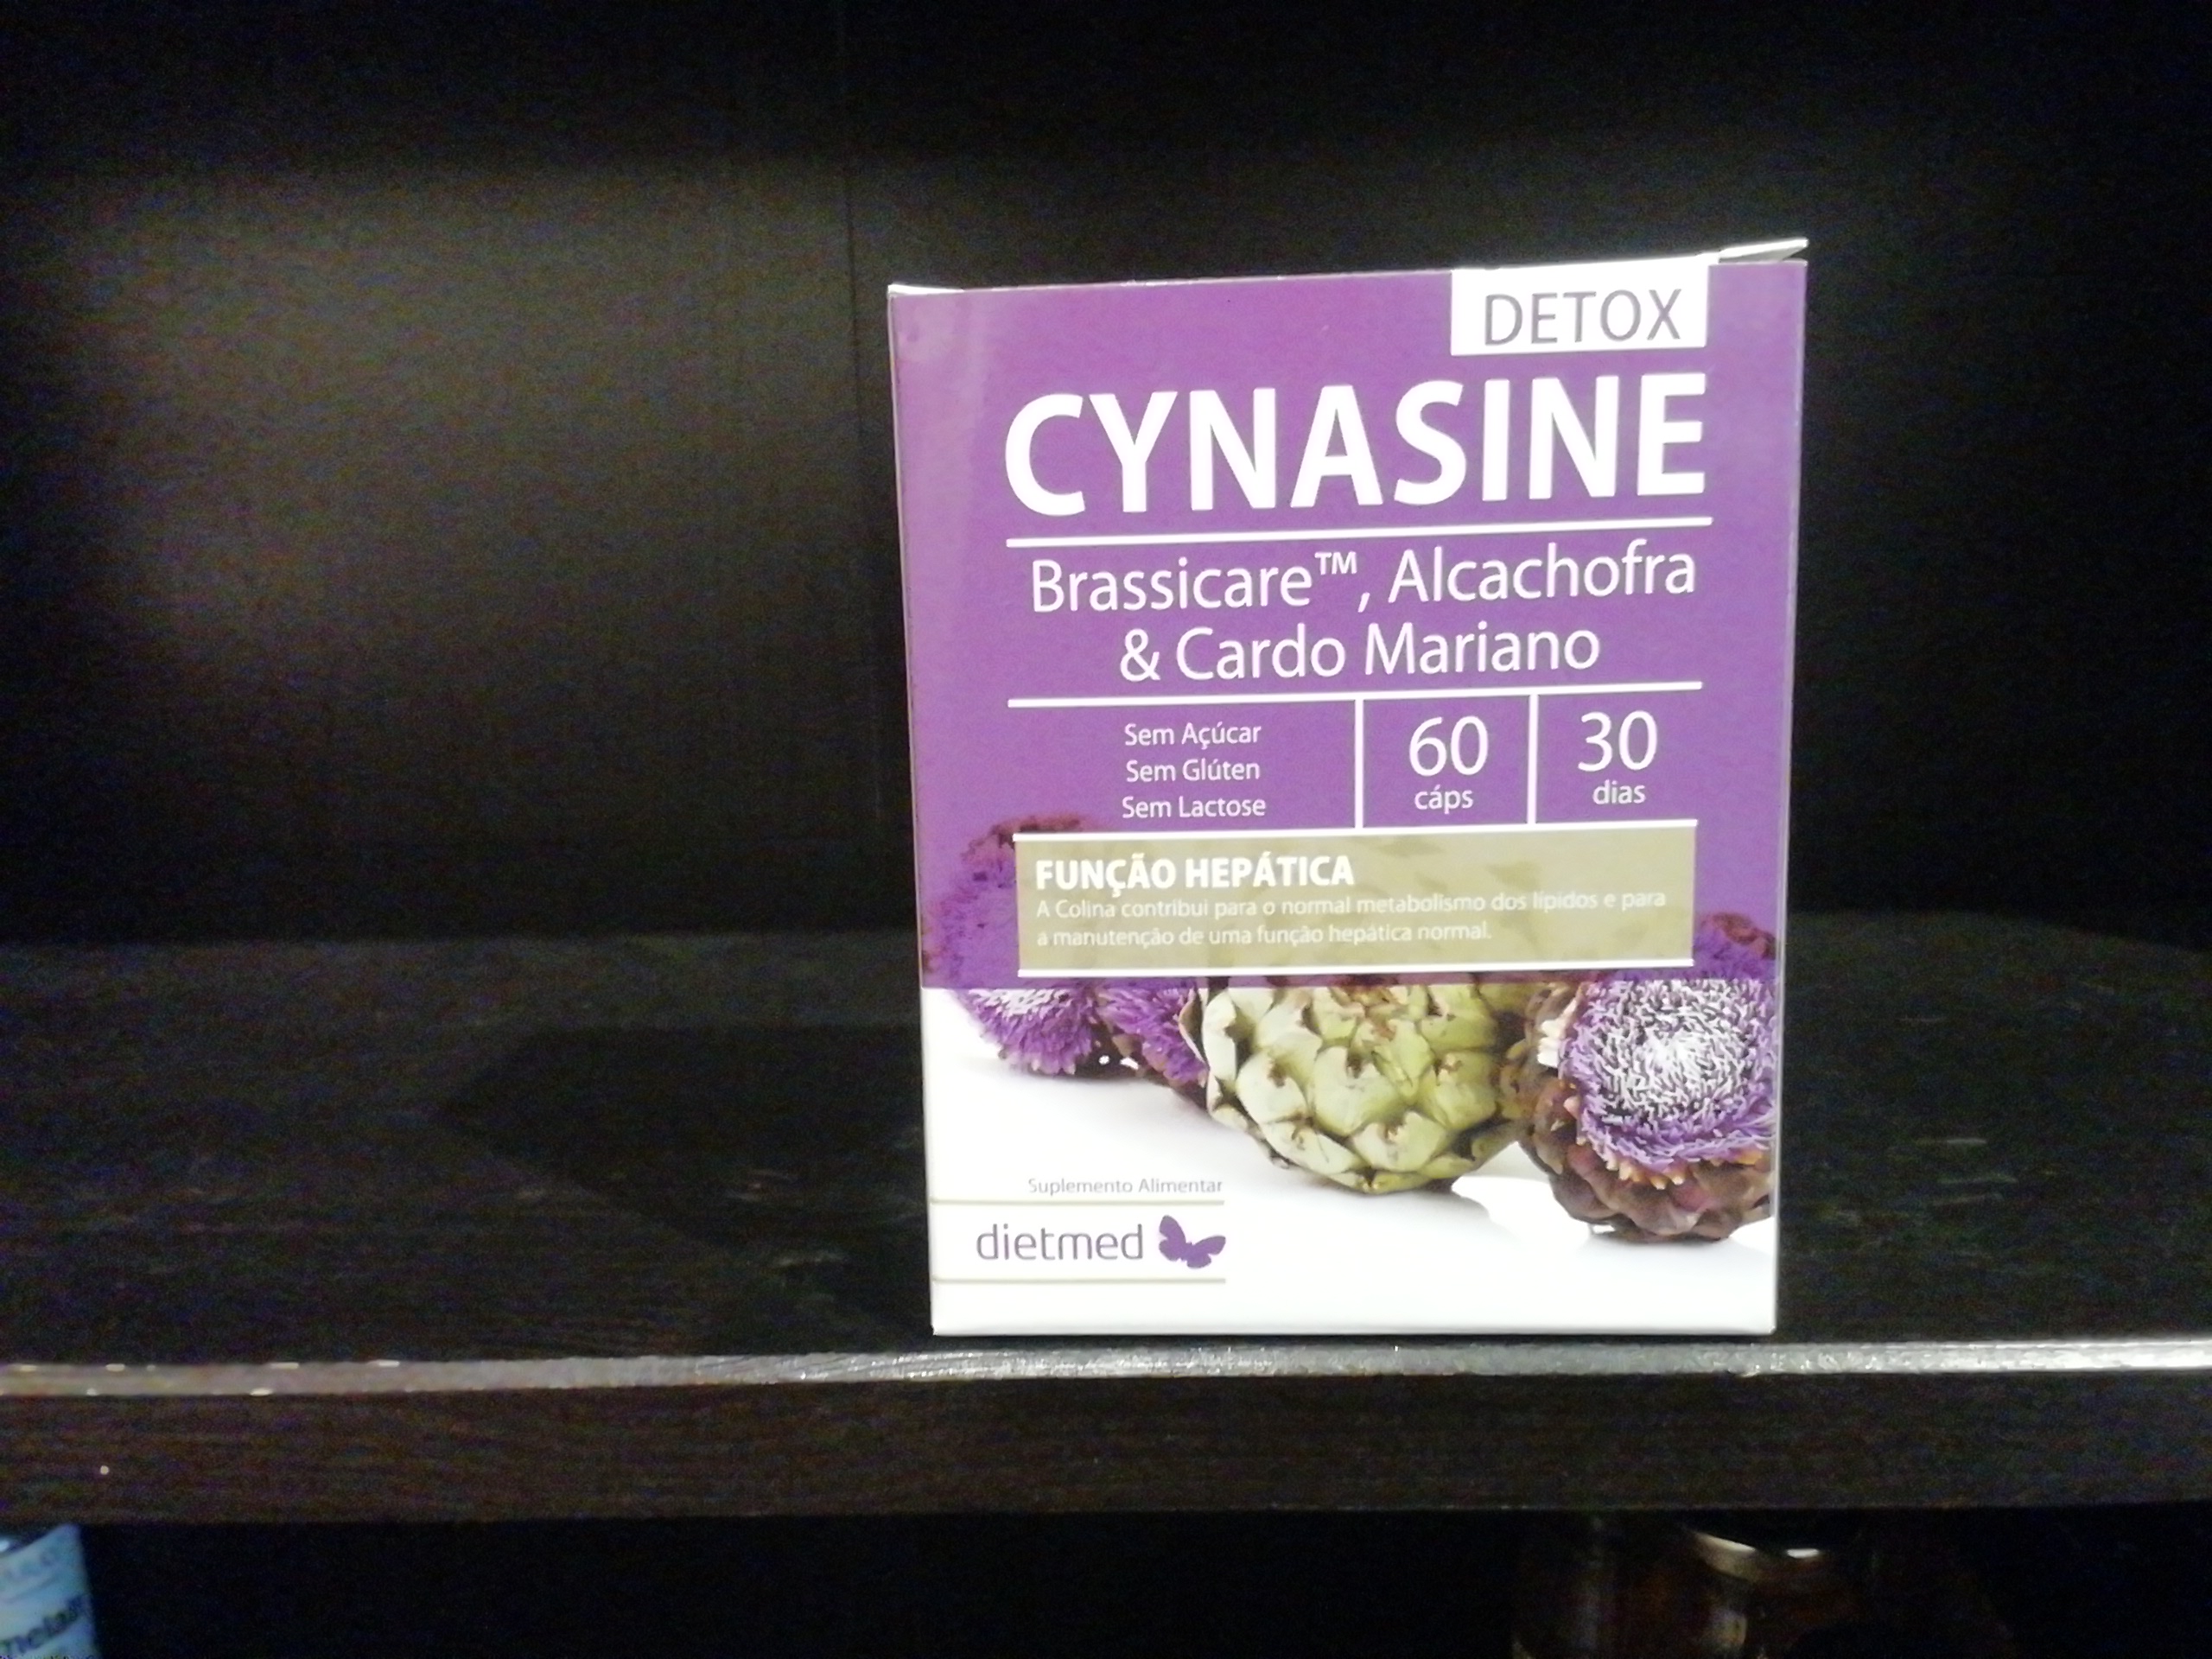 Cynasine Detox 60caps Dietmed 